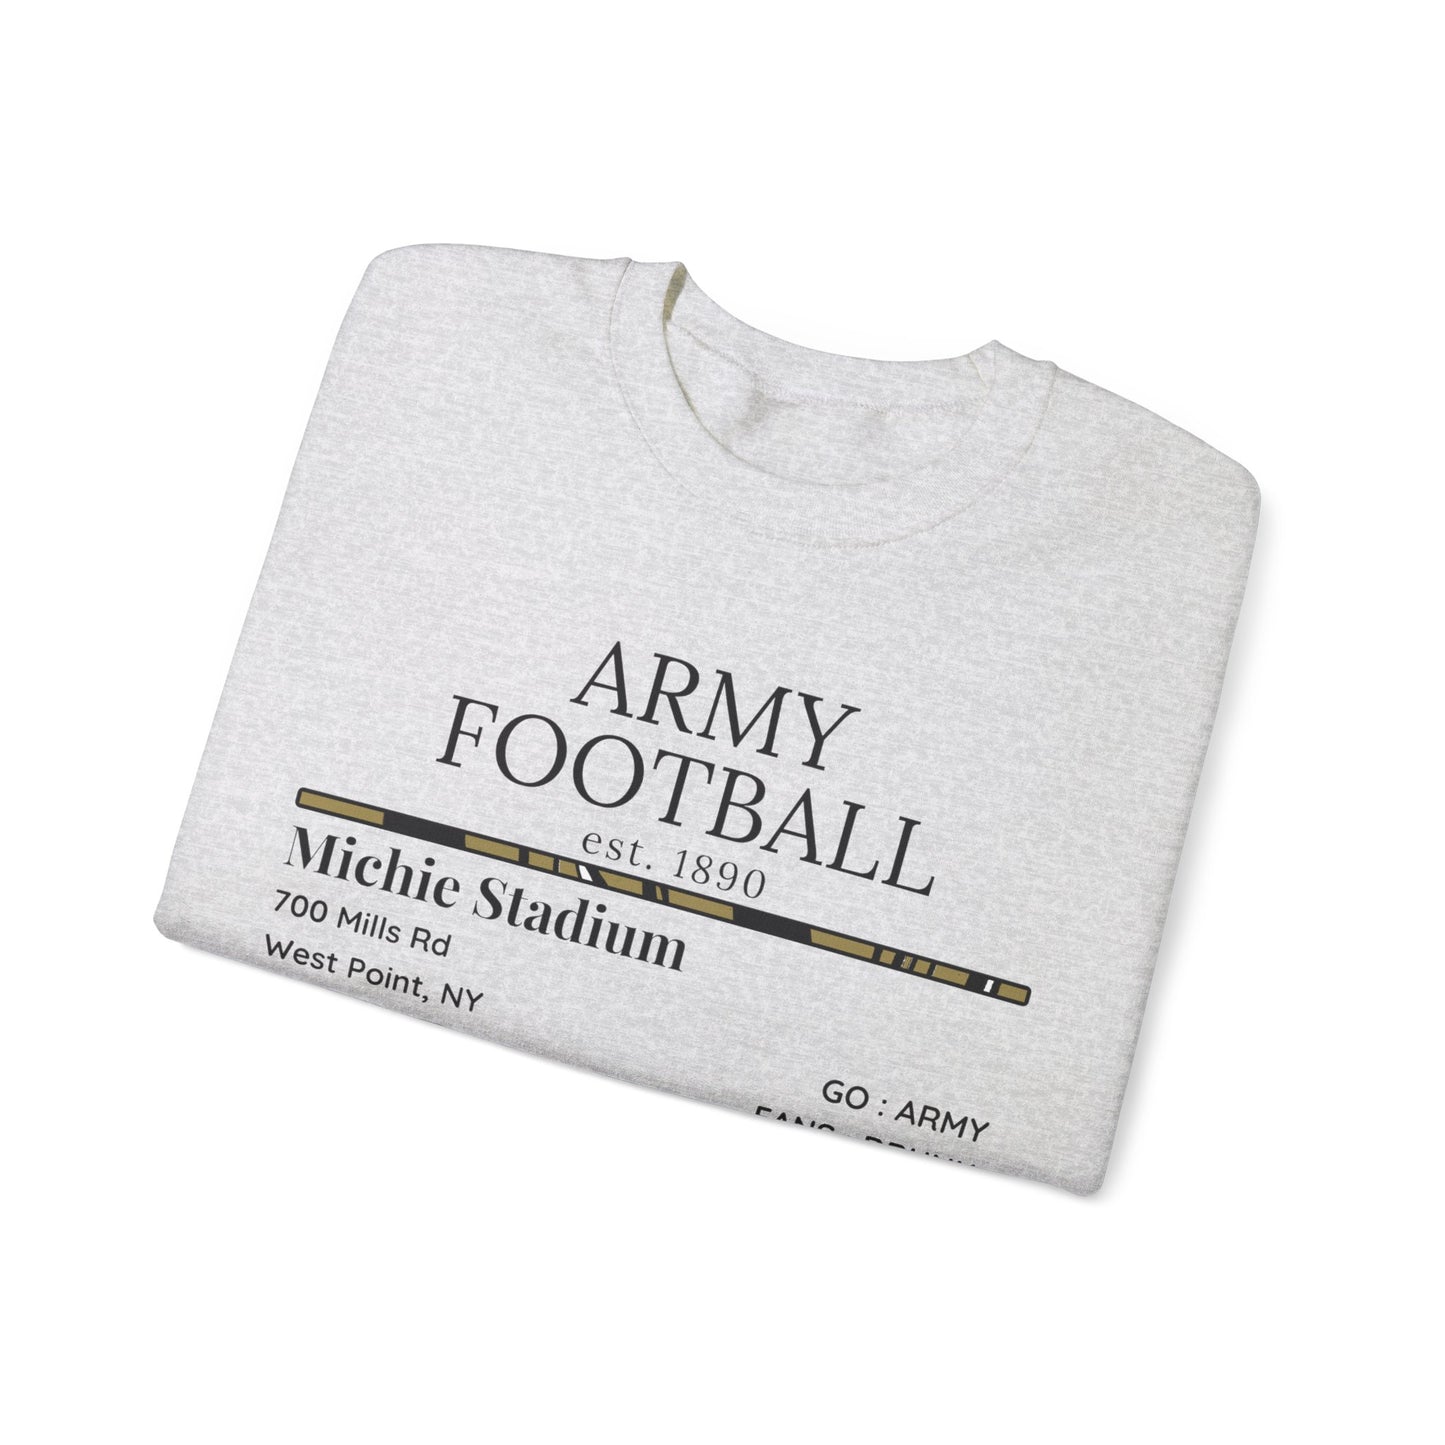 Army Football Sweatshirt